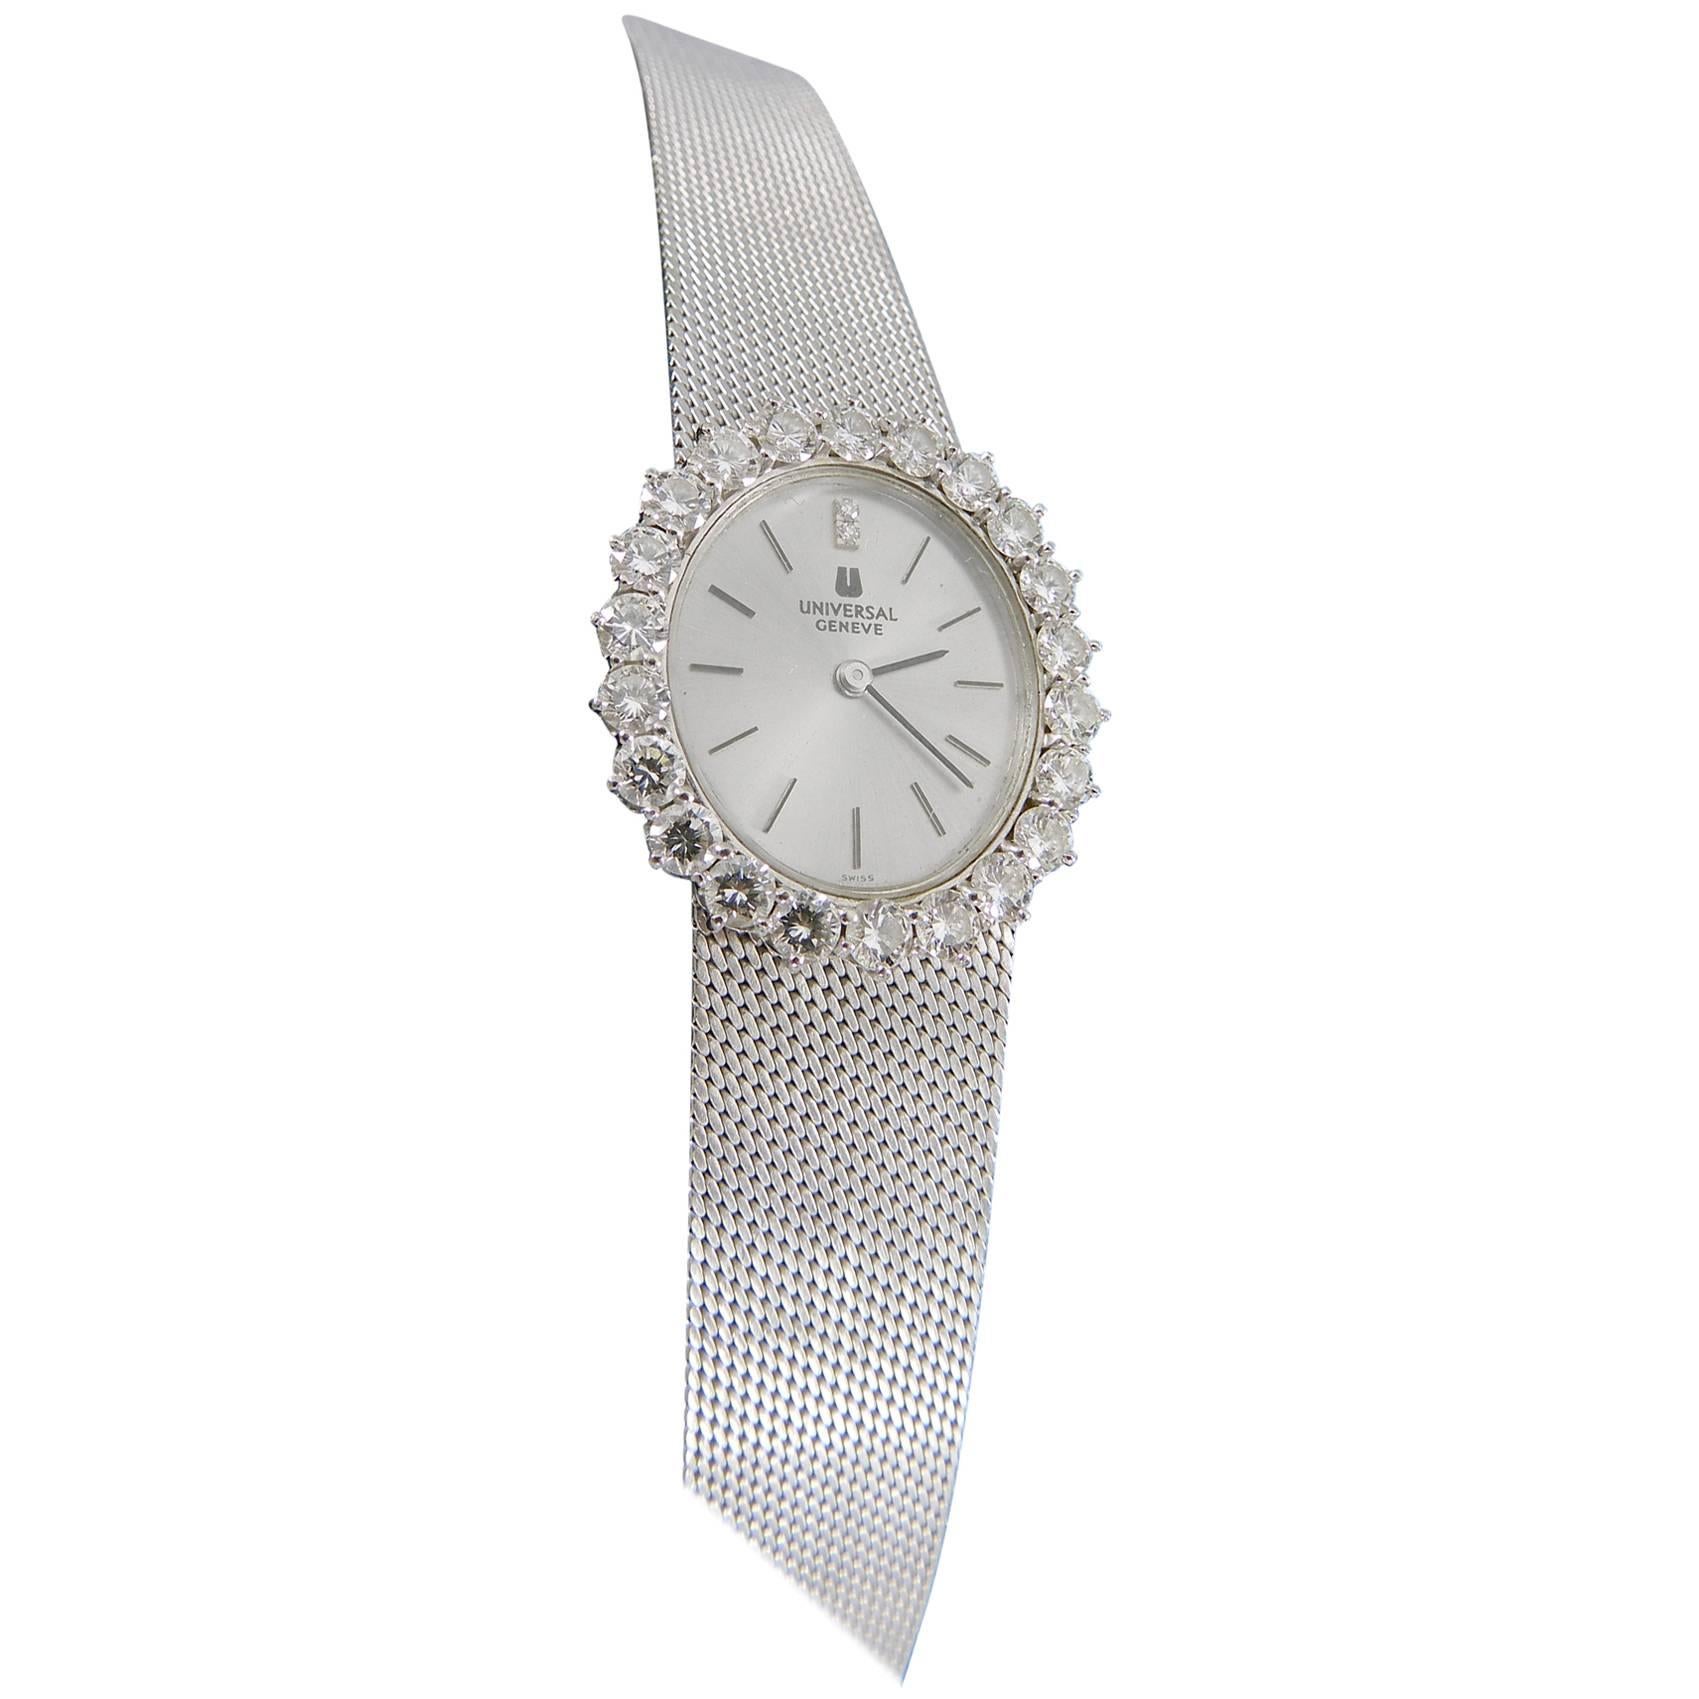 Universal Geneve Ladies White Gold Diamond Wristwatch